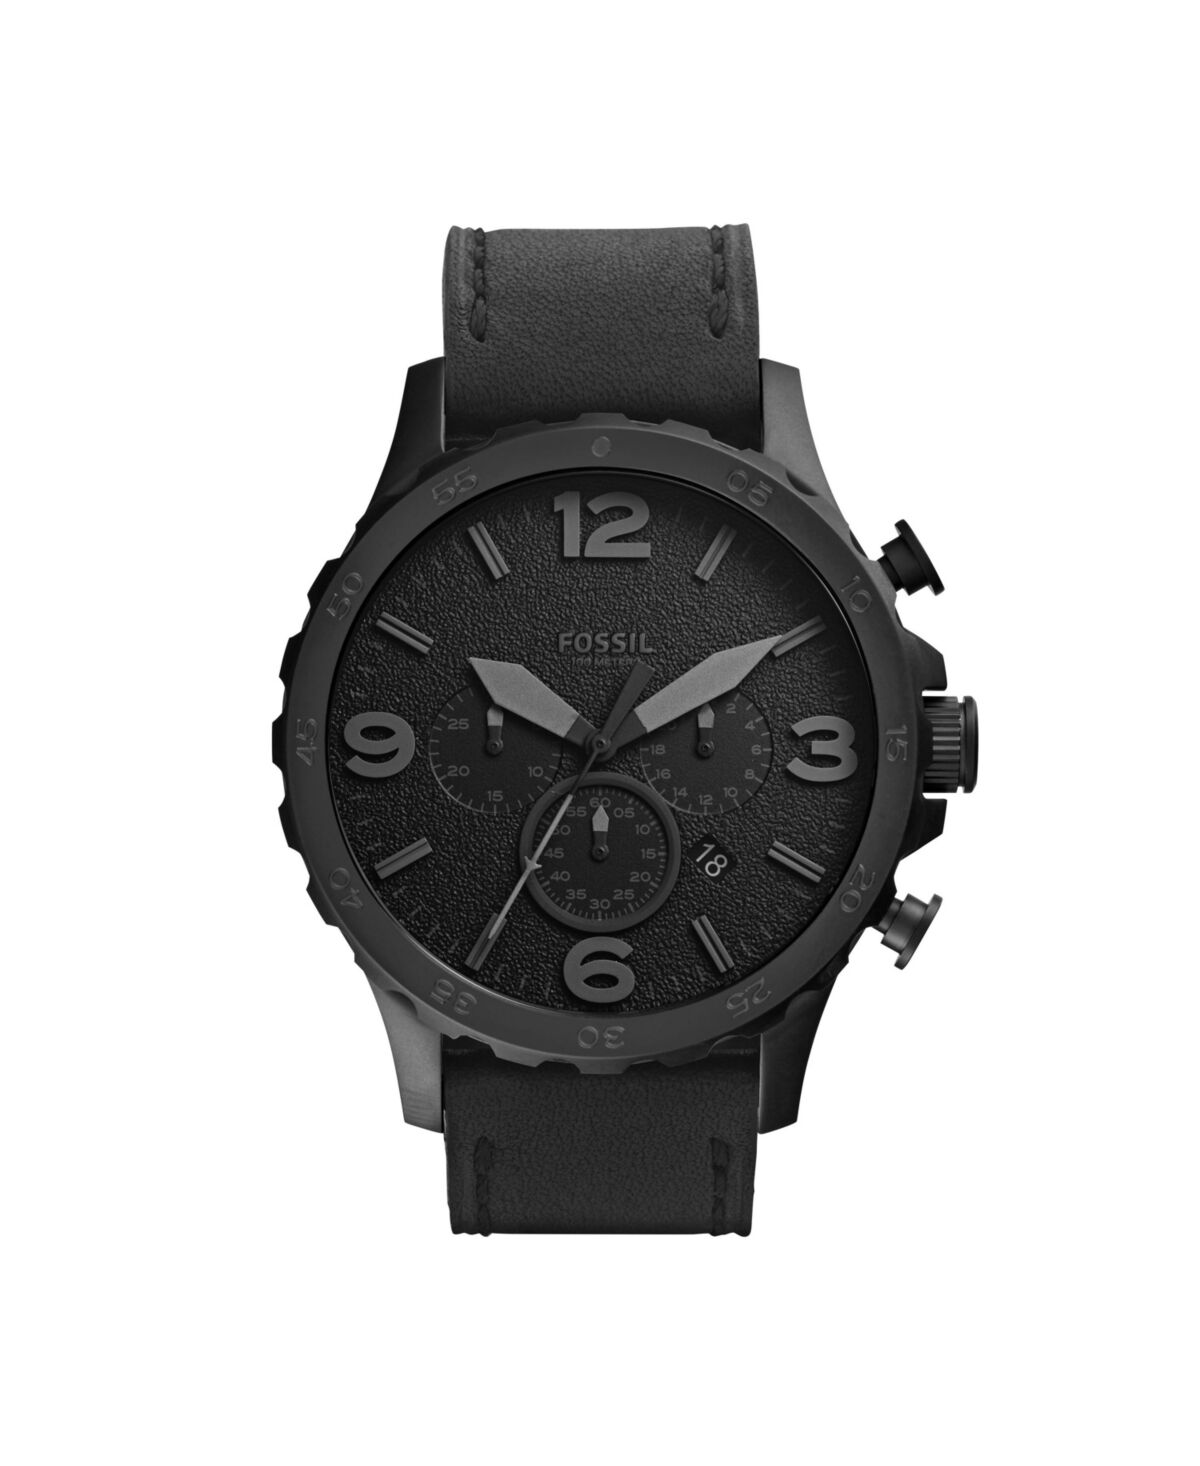 Fossil Men's Nate Black Leather Strap Watch - Black